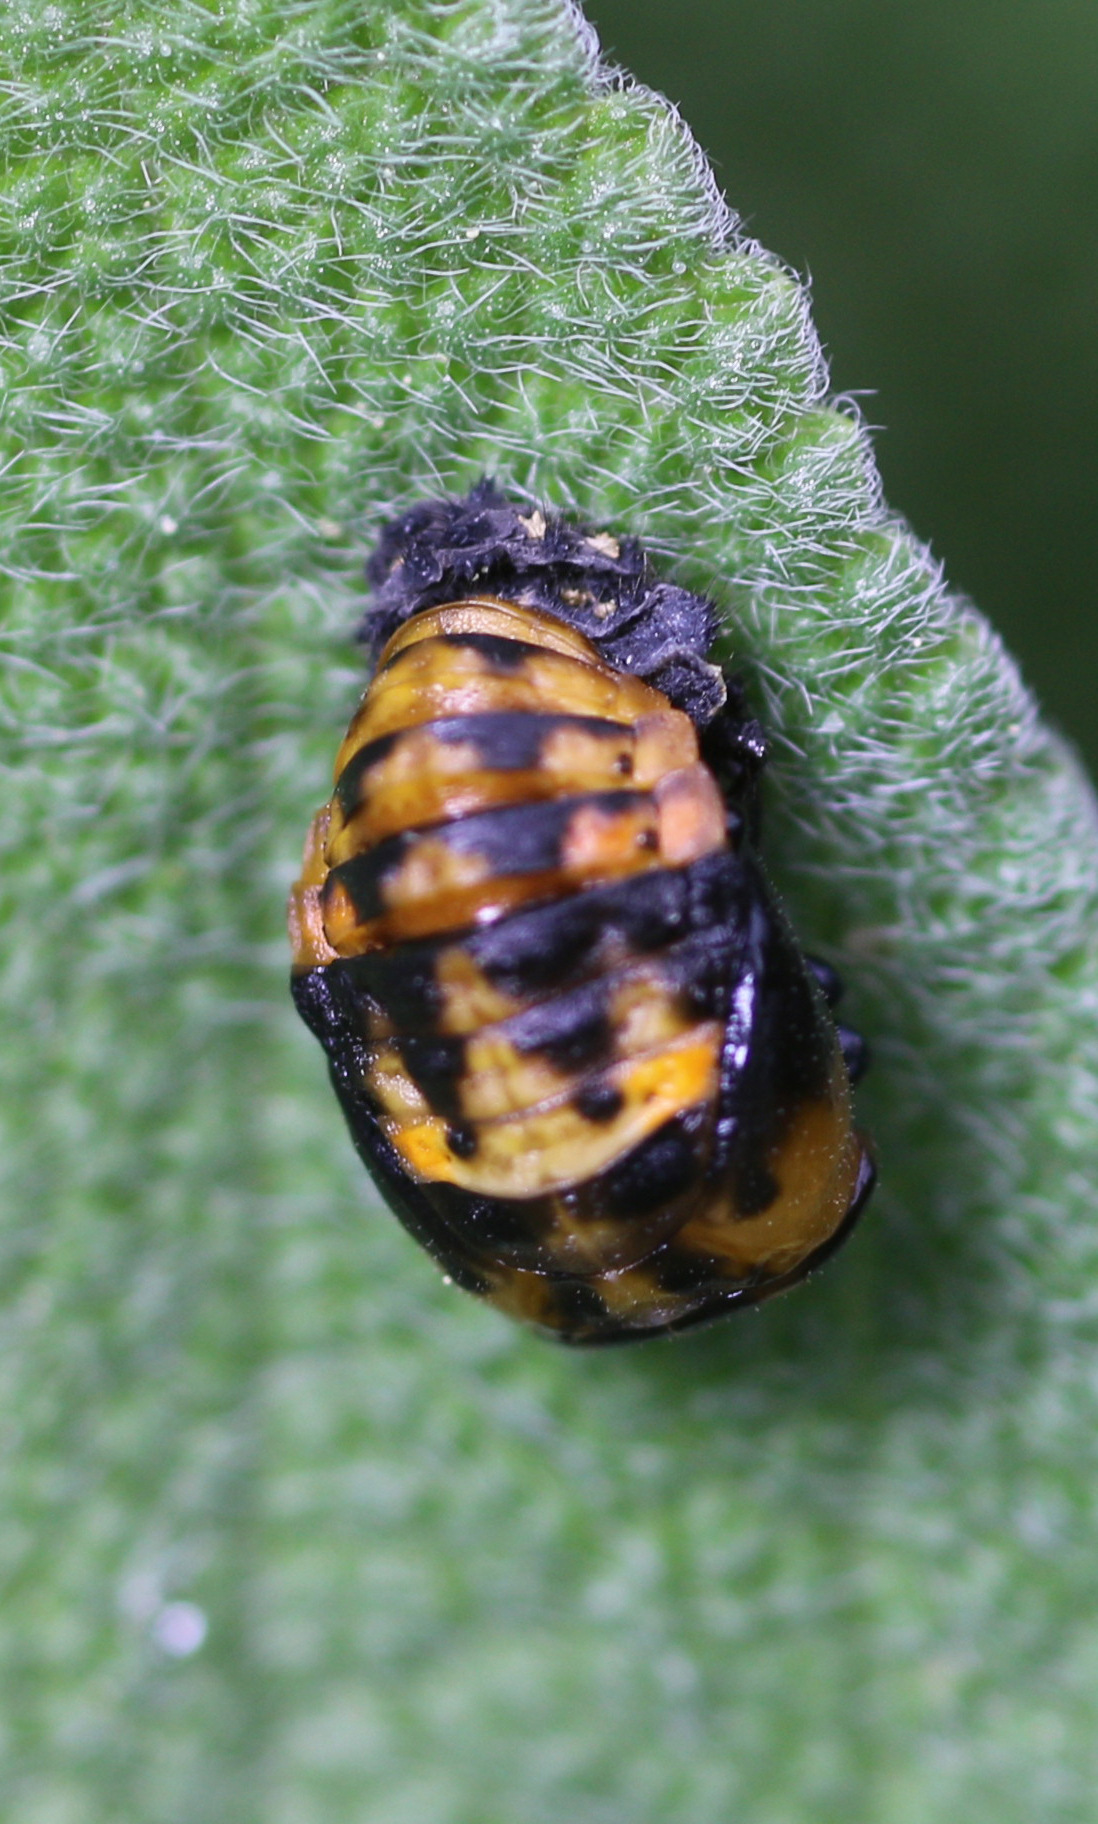 orange ladybug with black spots